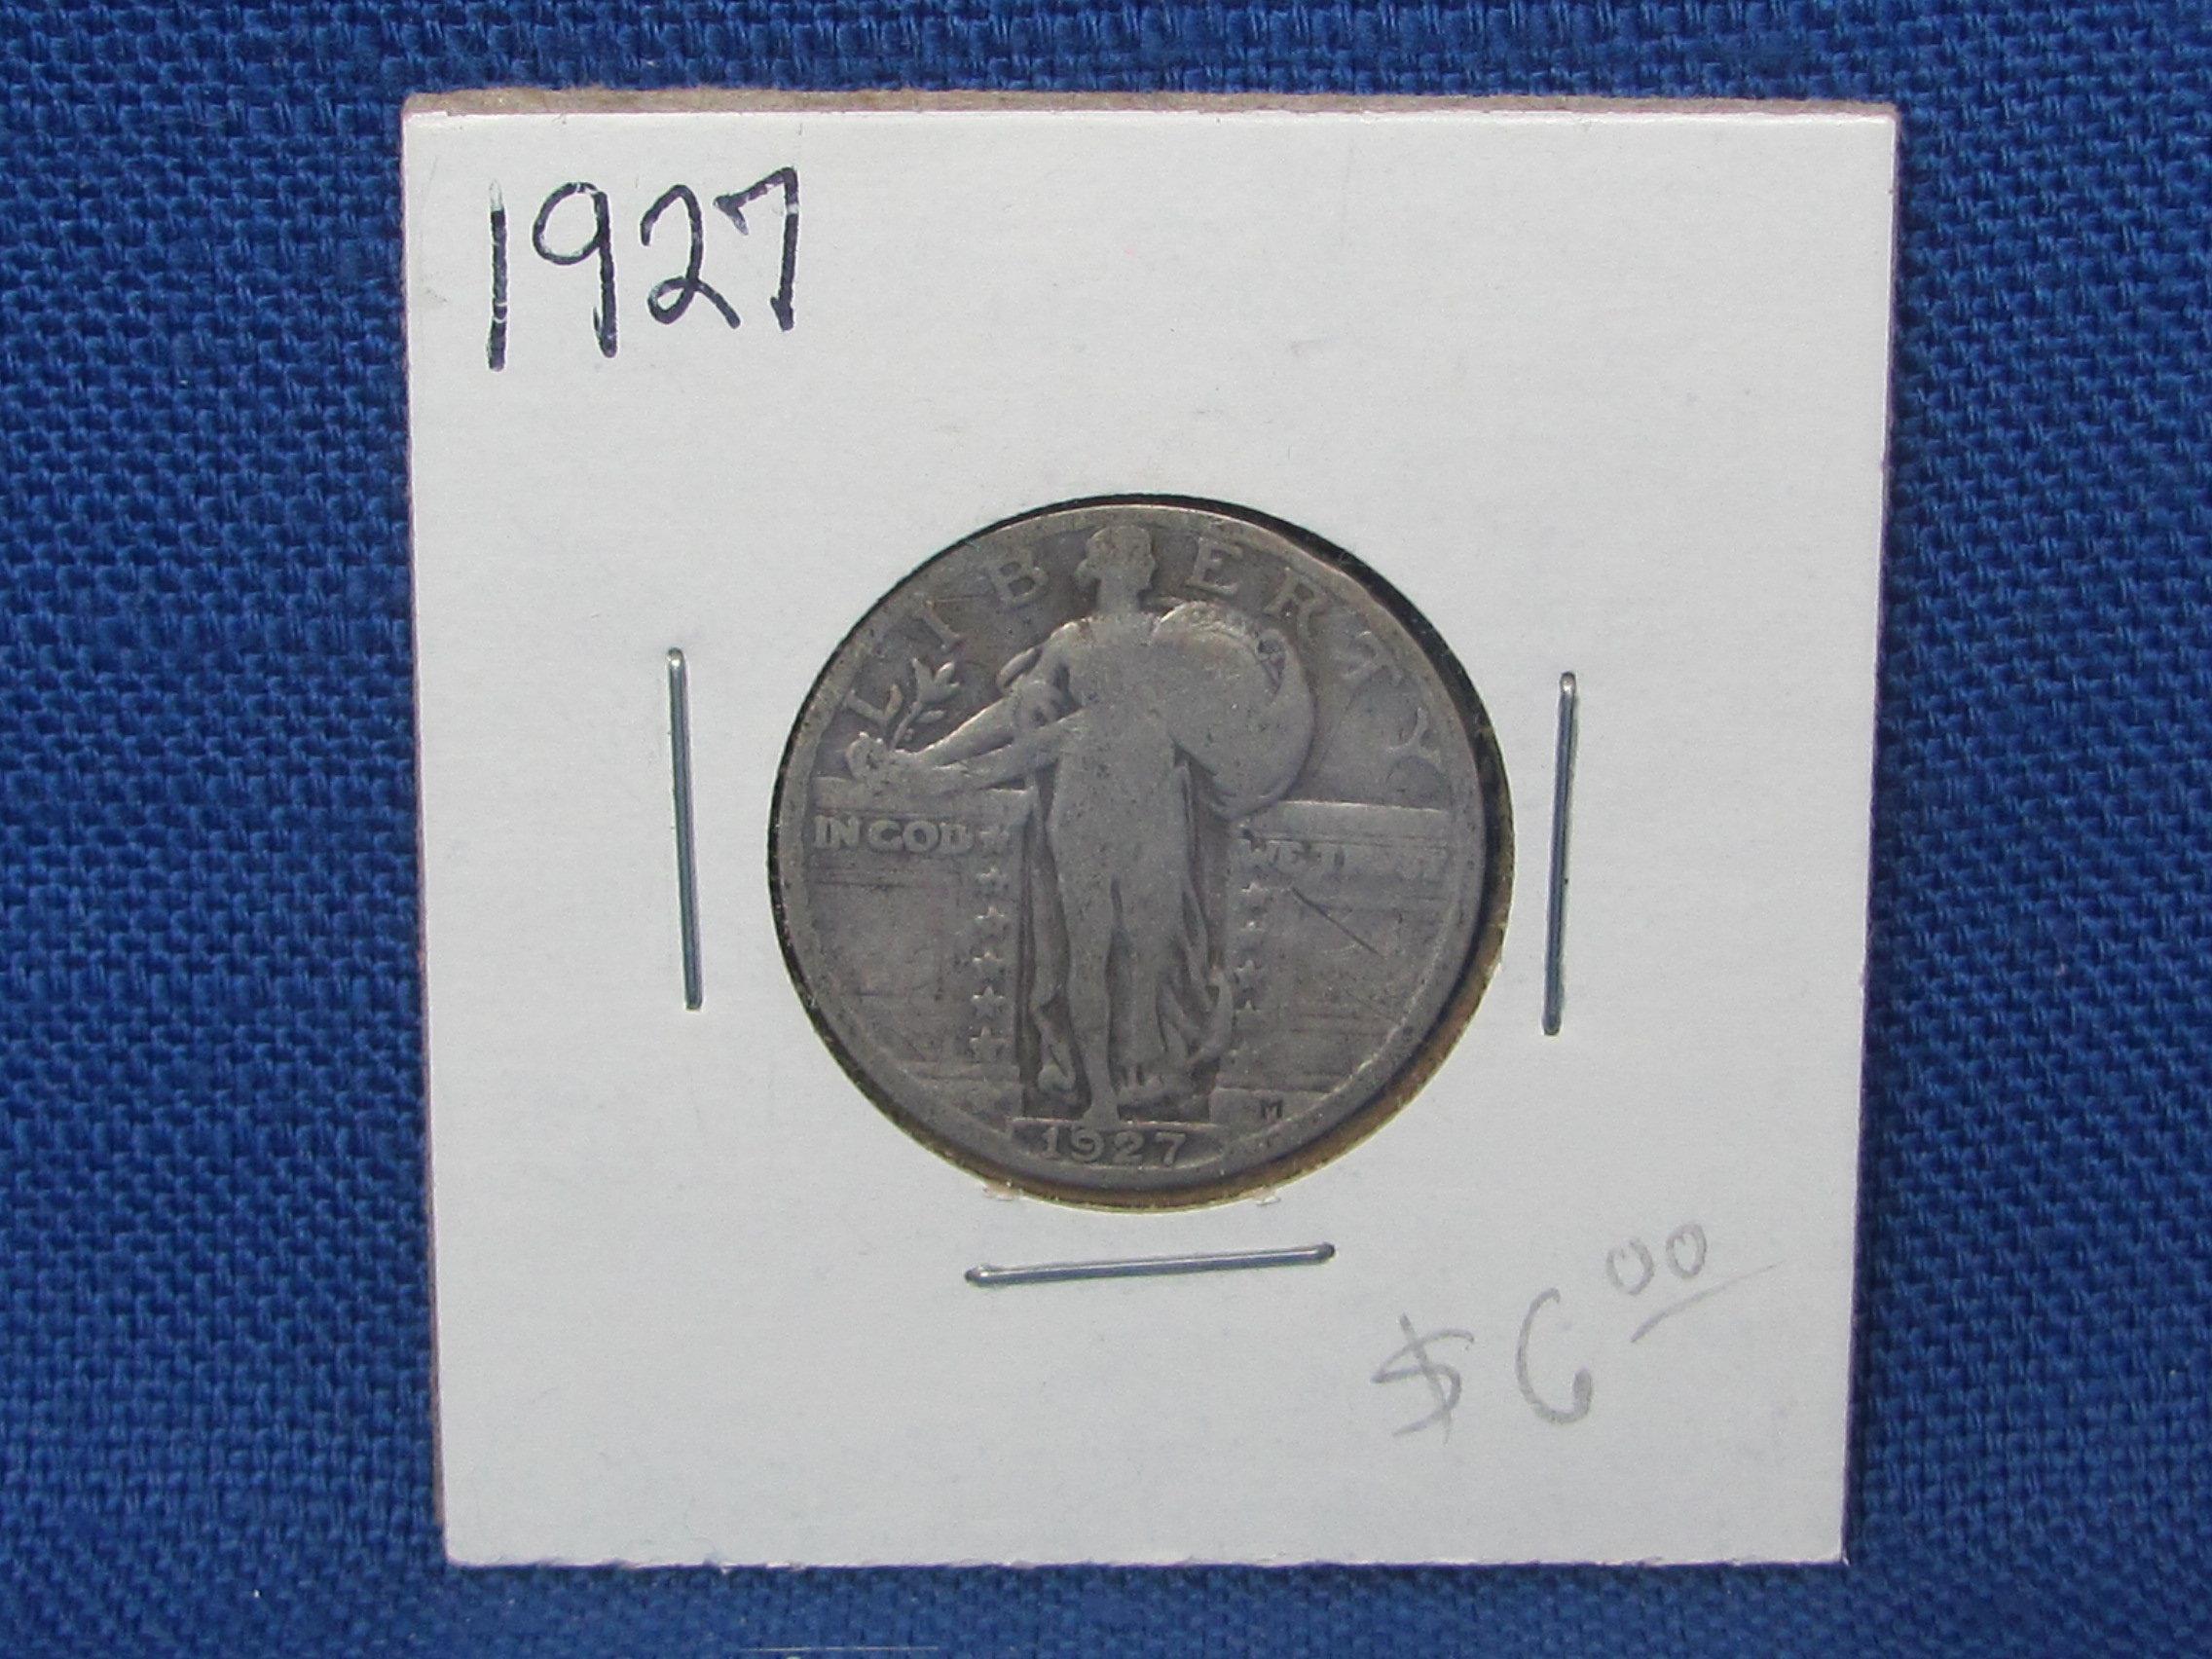 1927 Standing Liberty Quarter – 90% Silver – Condition as shown in photos